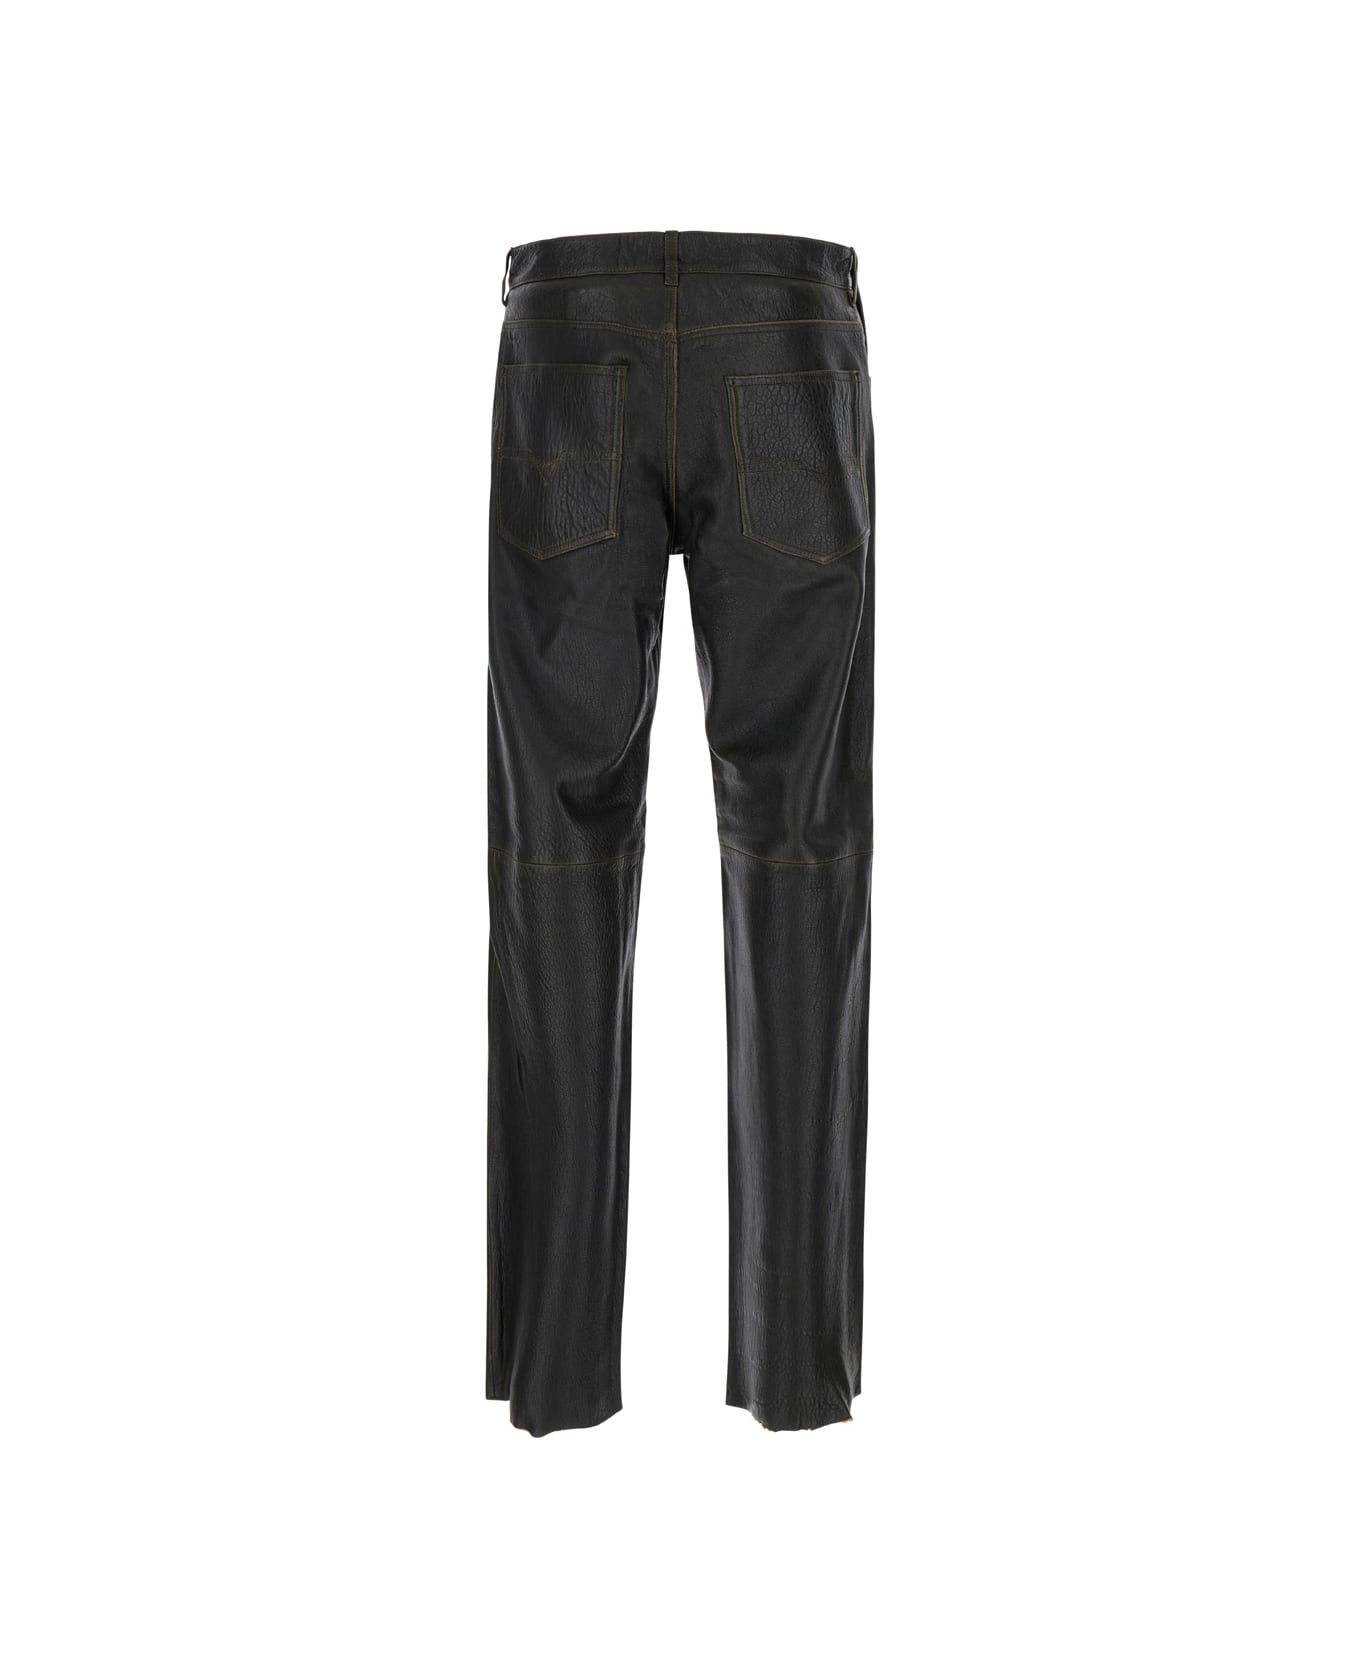 Diesel Black 'p-kooman' Trousers In Sheepskin Leather Man - Black